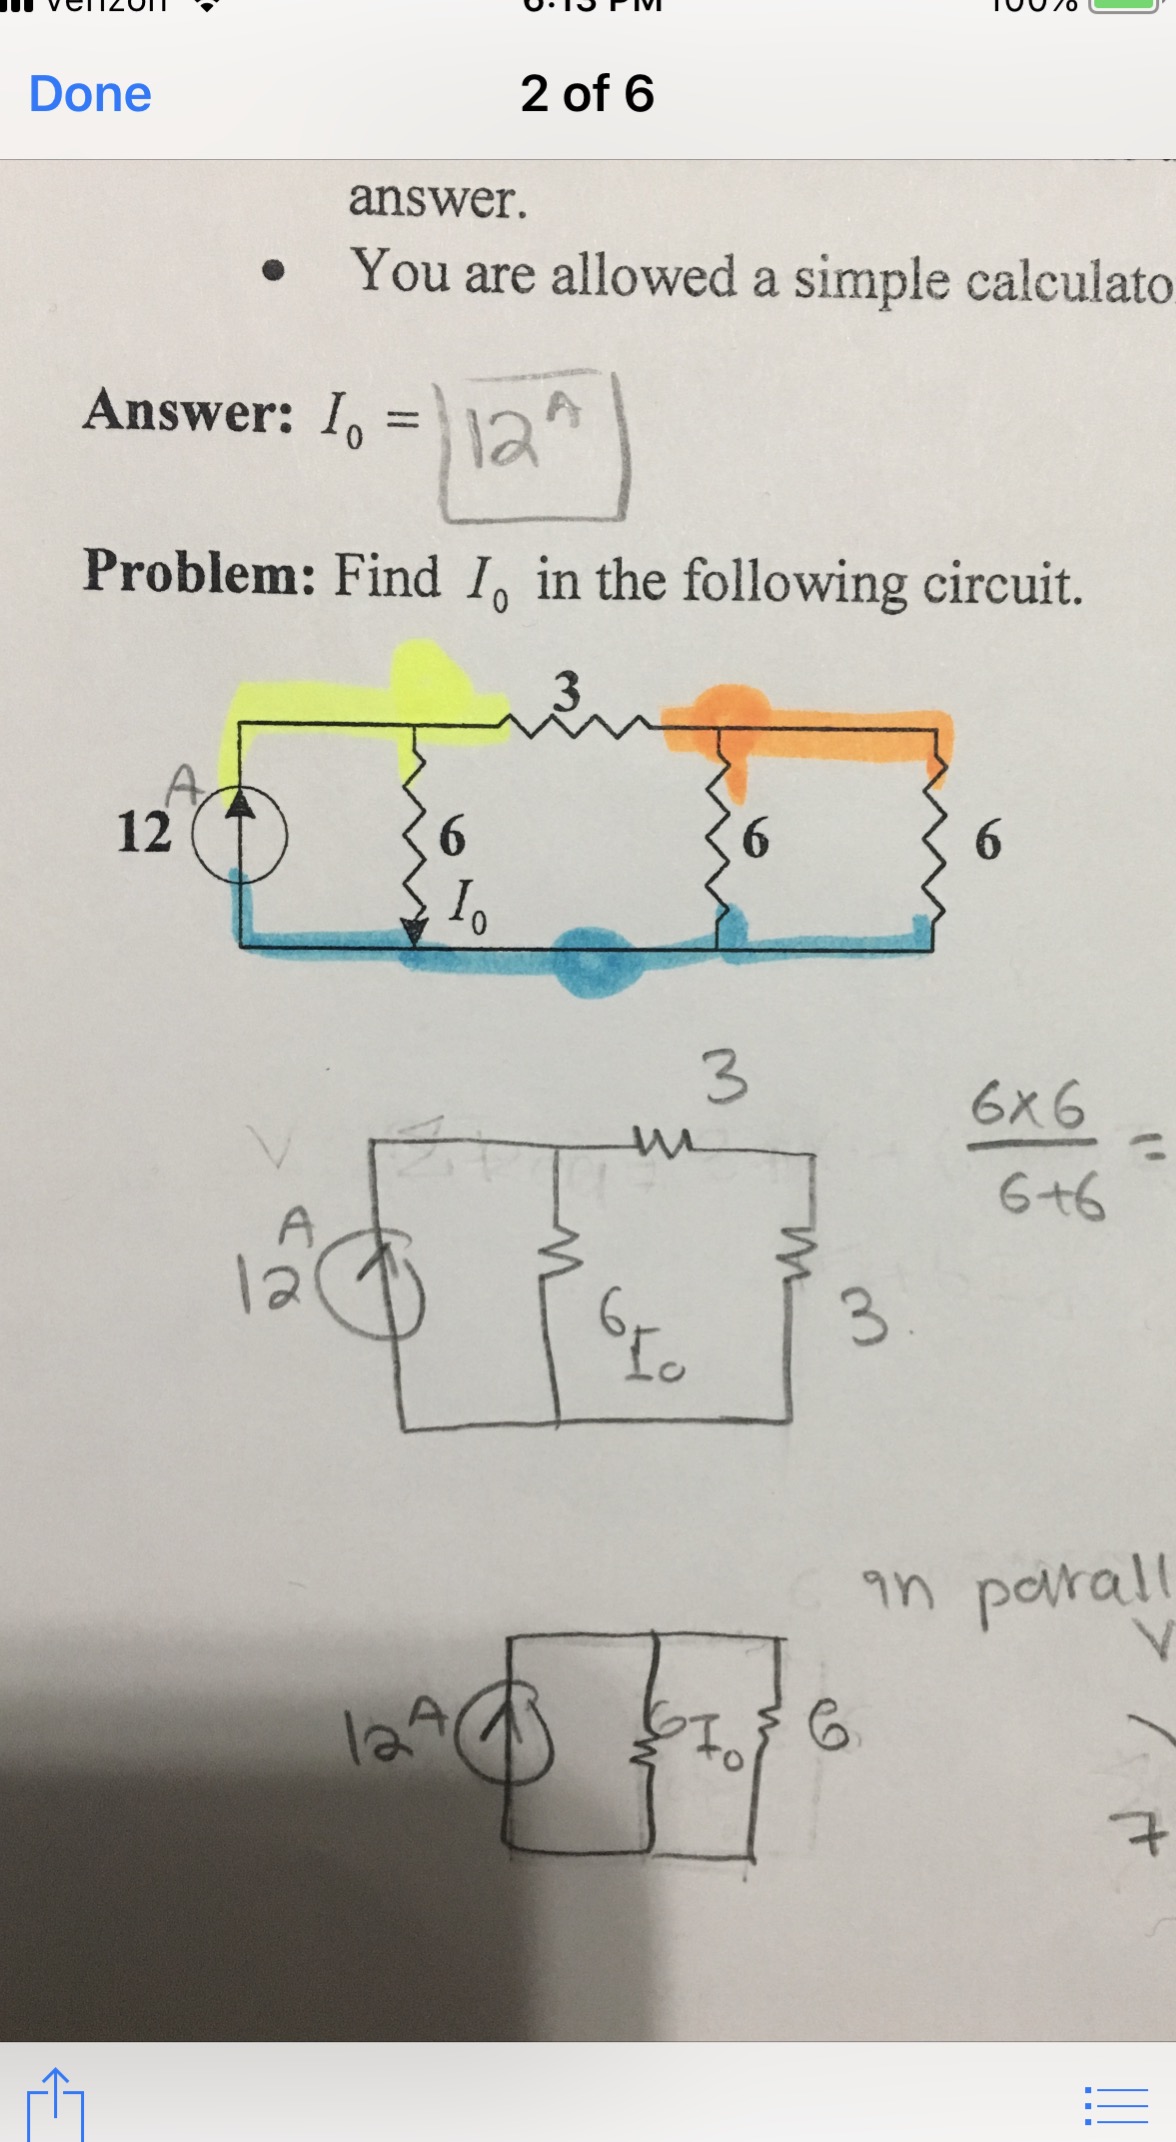 Done
2 of 6
answer.
You are allowed a simple calculato
Answer:
A
Problem: Find Io in the following circuit.
3
3
6x6
6+6
la
Lo
in porall
le
